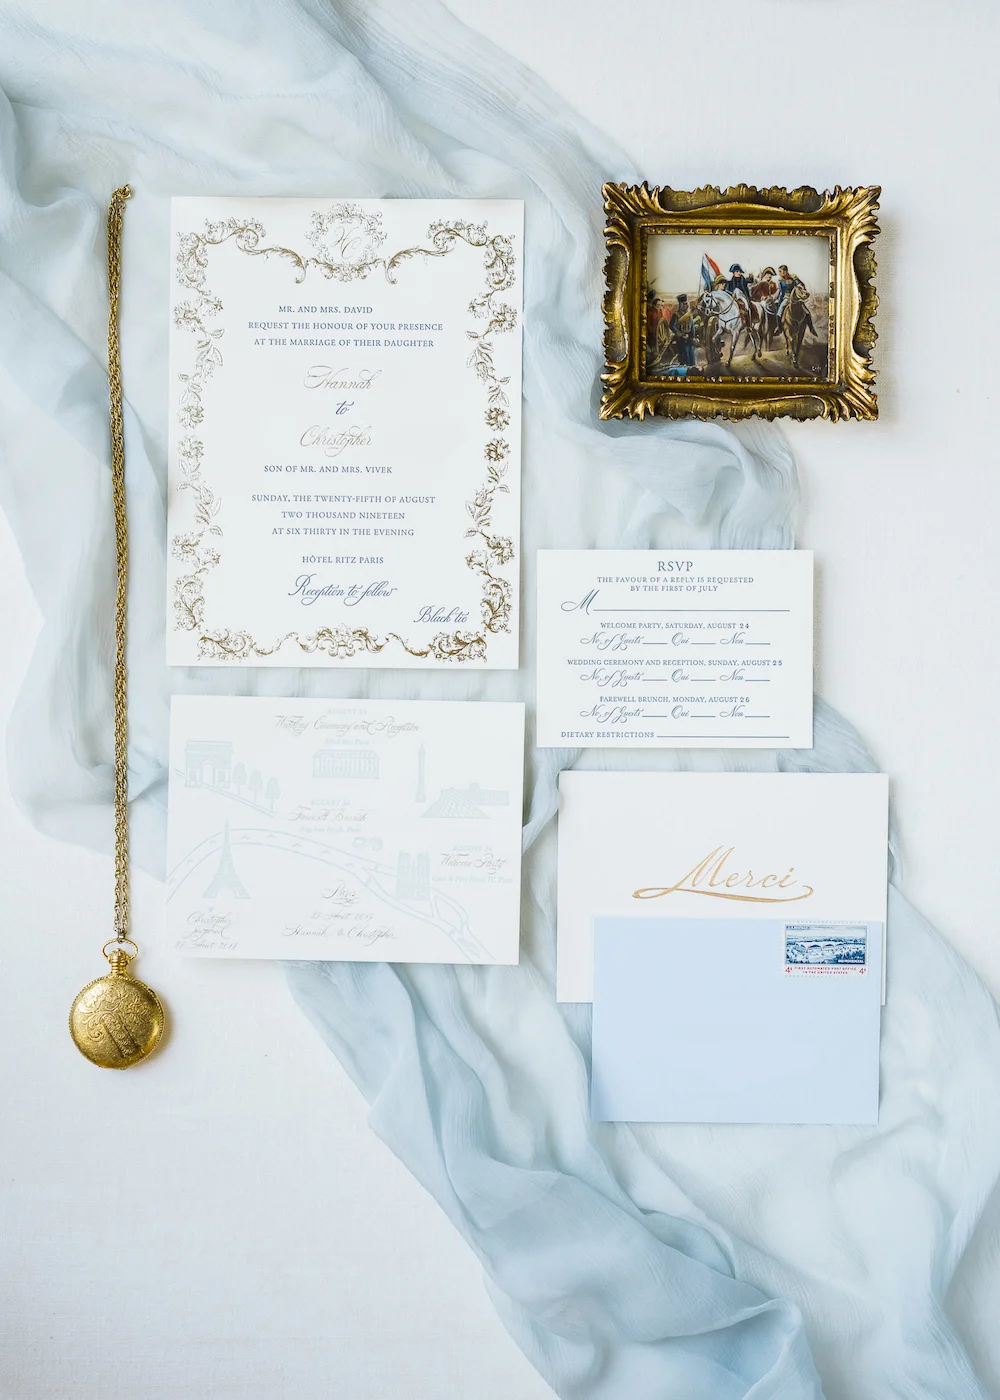 Paris wedding blue and gold foil letterpress invitations